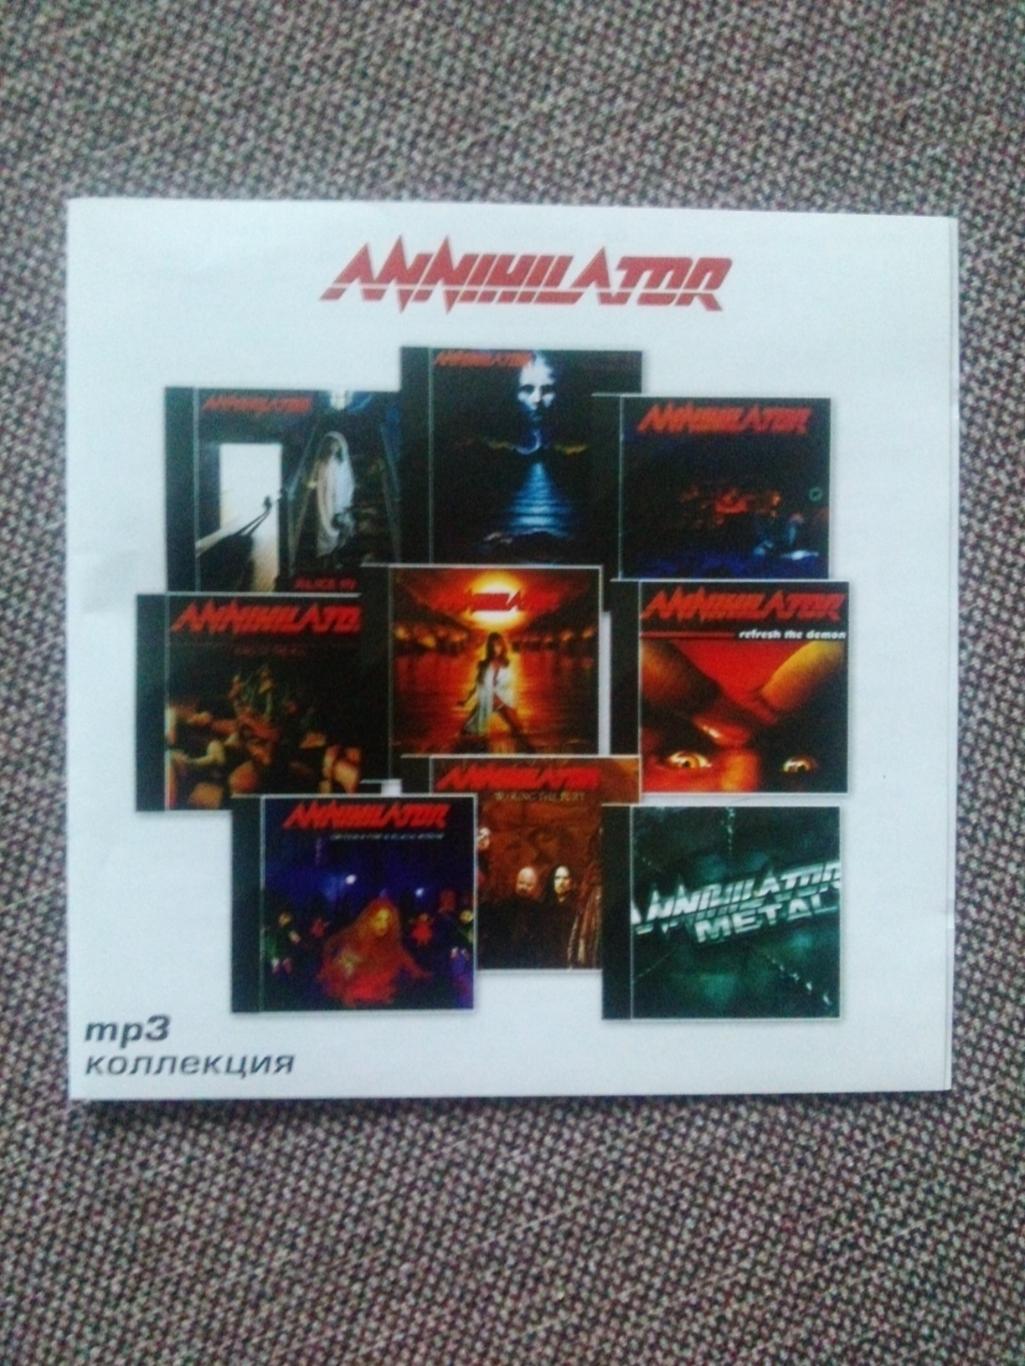 MP - 3 CD : группа Annihilator 1989 - 2007 гг. (13 альбомов) Thrash metal Рок